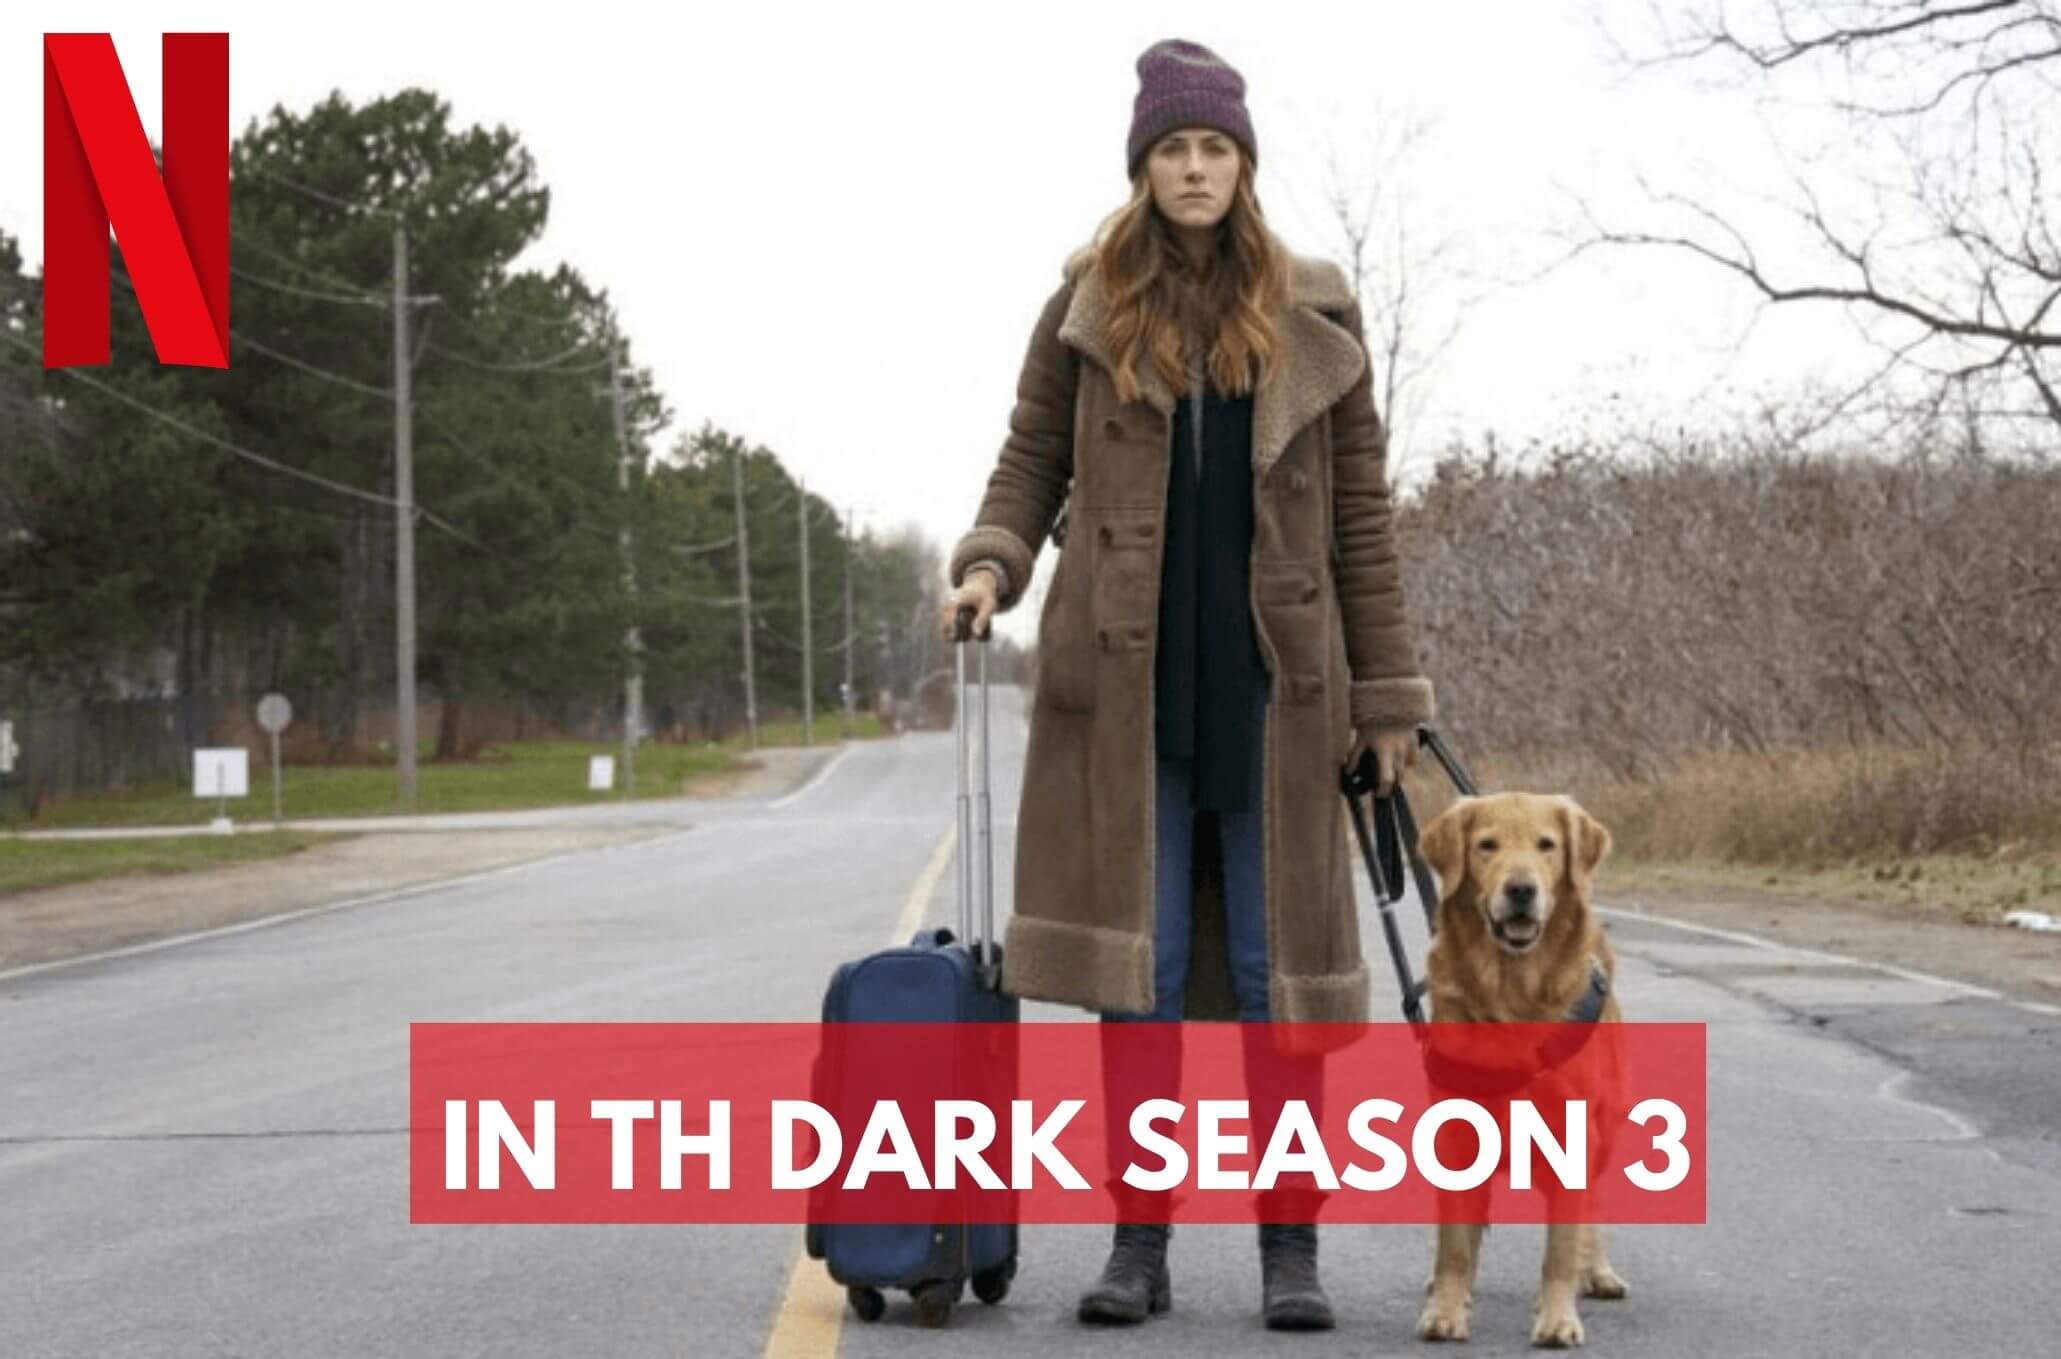 In th dark season 3